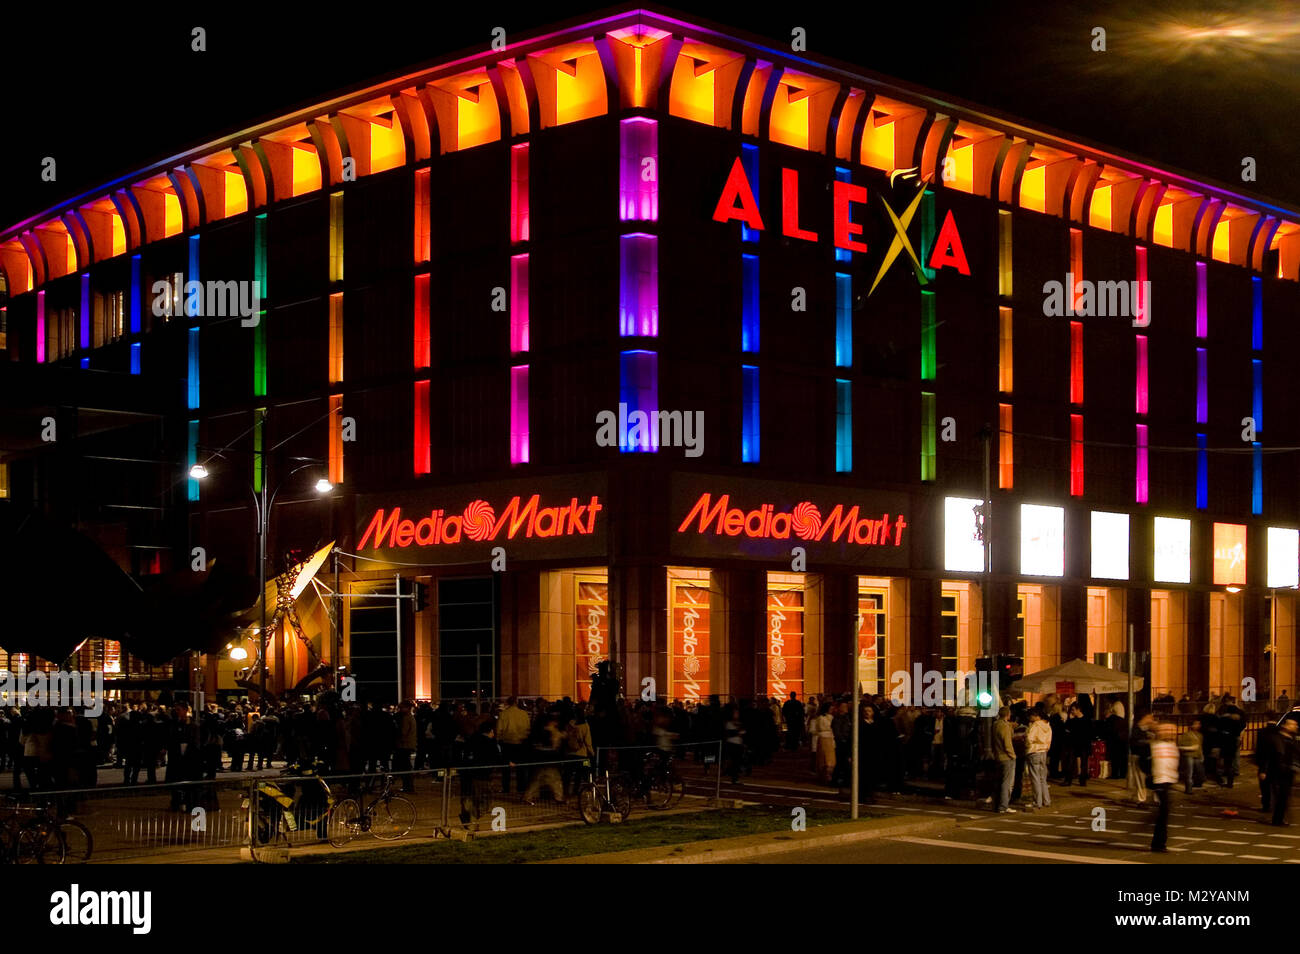 Mediamarkt im Alexa Stock - Alamy